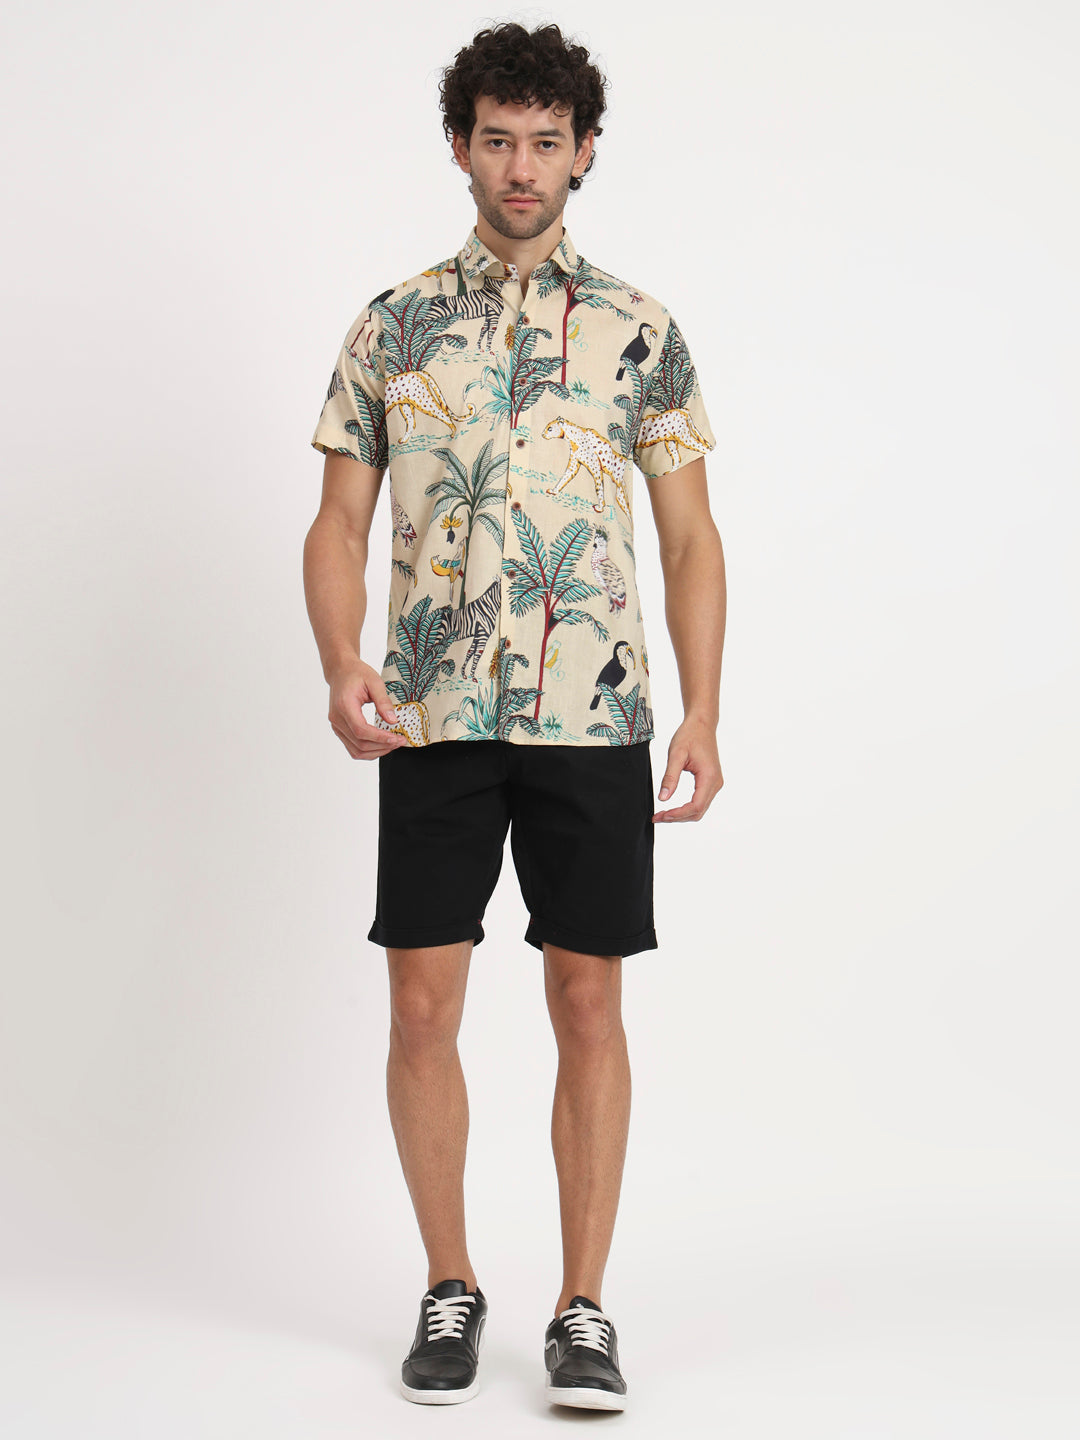 Firangi Yarn Floral Printed Cotton Beige Botanical Shirt For Men | Indian Printed Beach Shirt